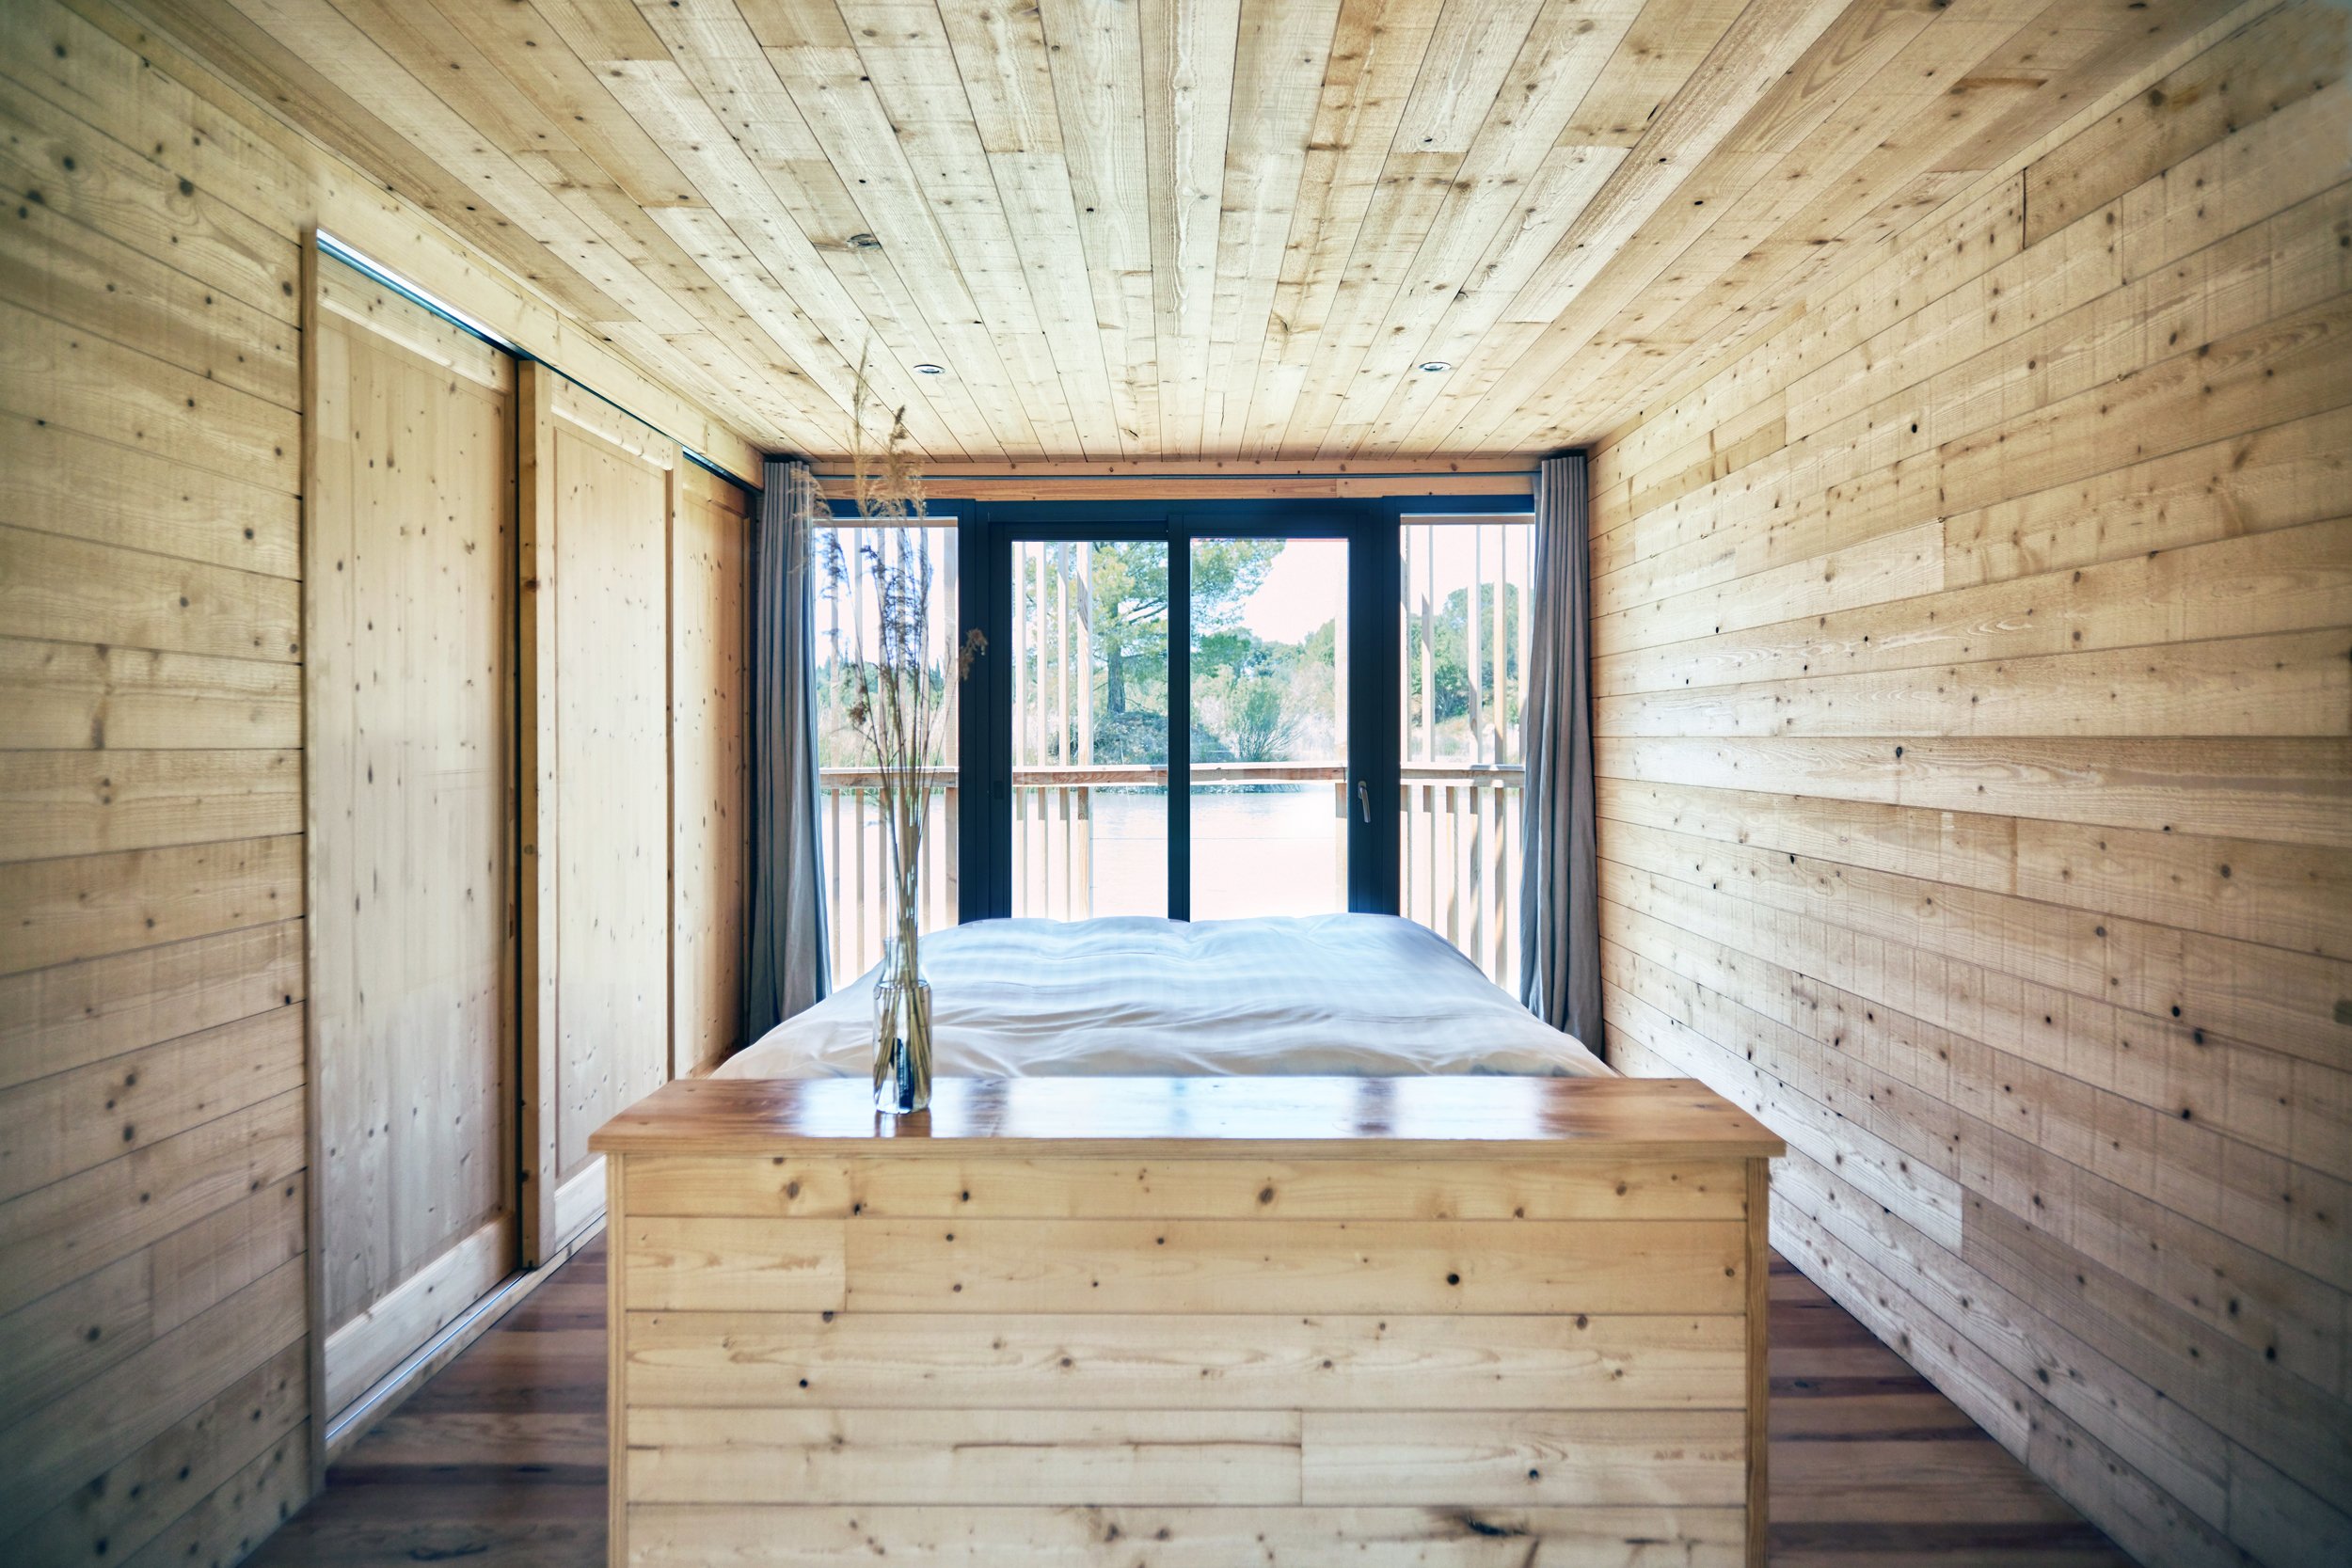 Atelier+LAVIT+nectar+wood+floating+cabin+interior.jpg